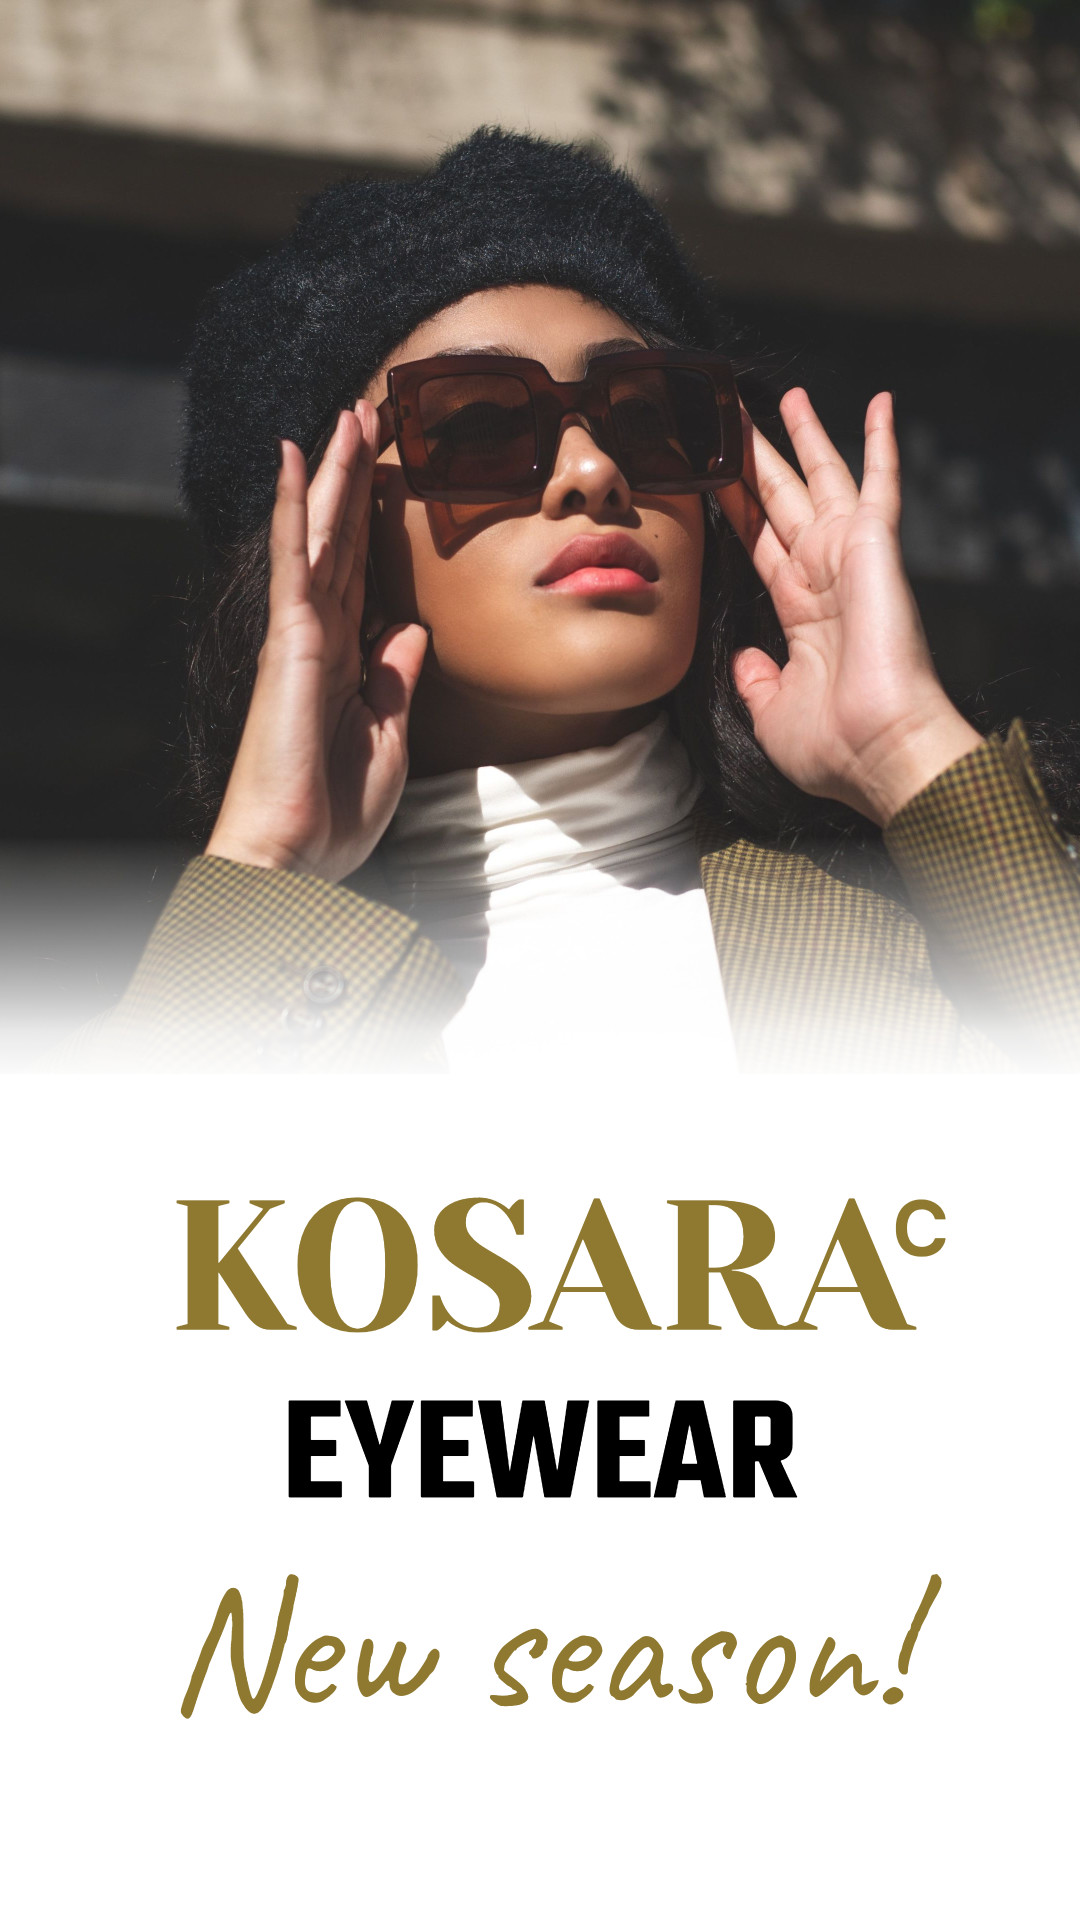 Kosara eyewear new season